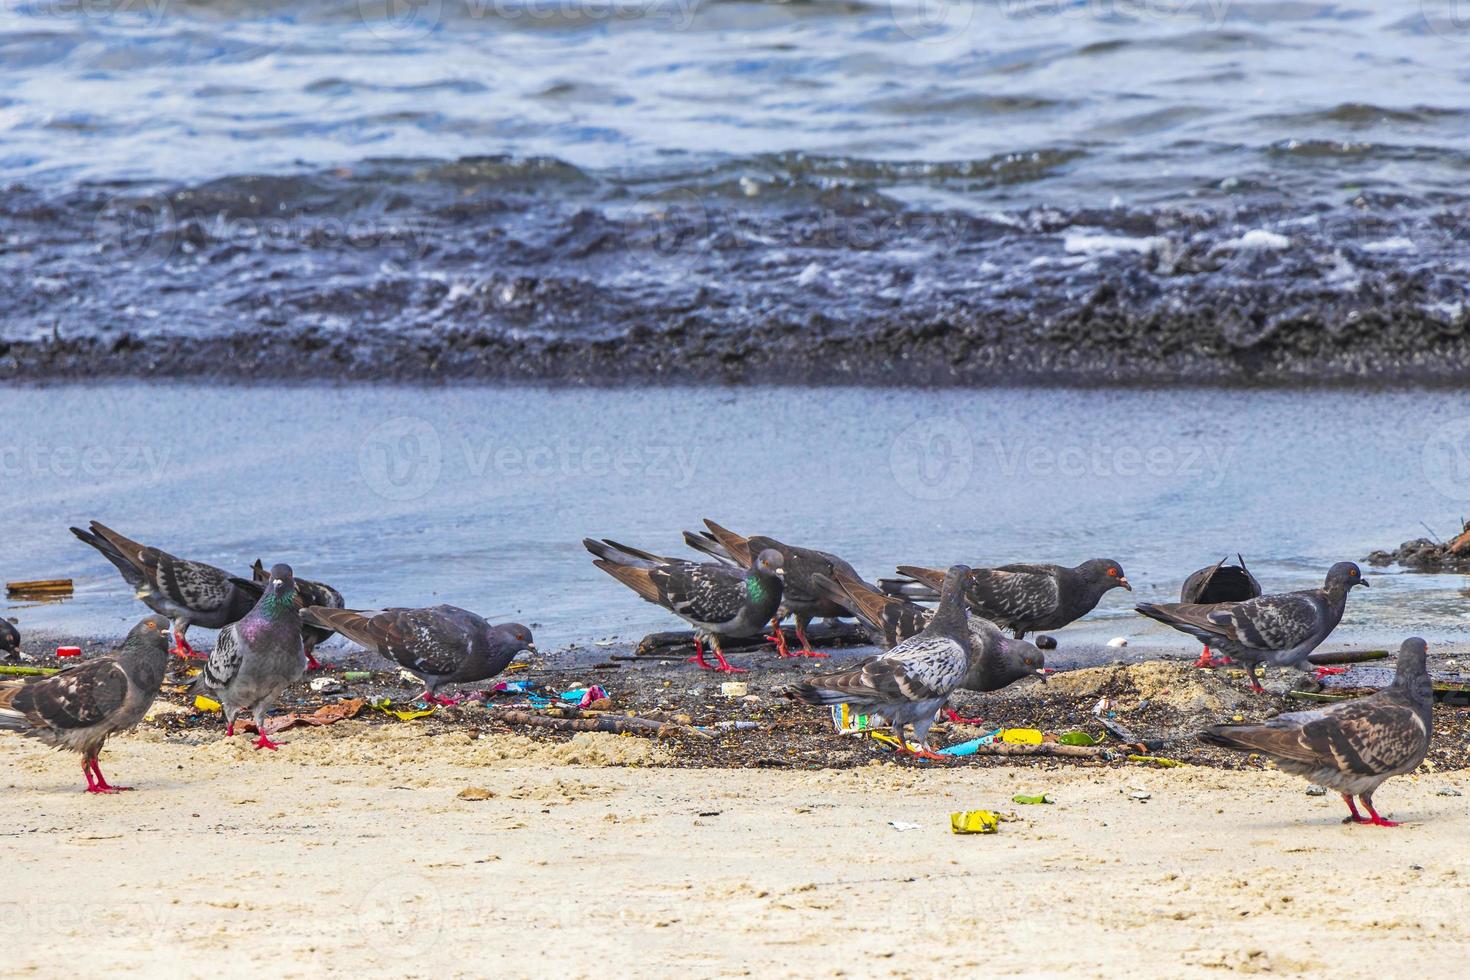 tauben vögel fressen von angeschwemmten angeschwemmten müllverschmutzung brasilien. foto